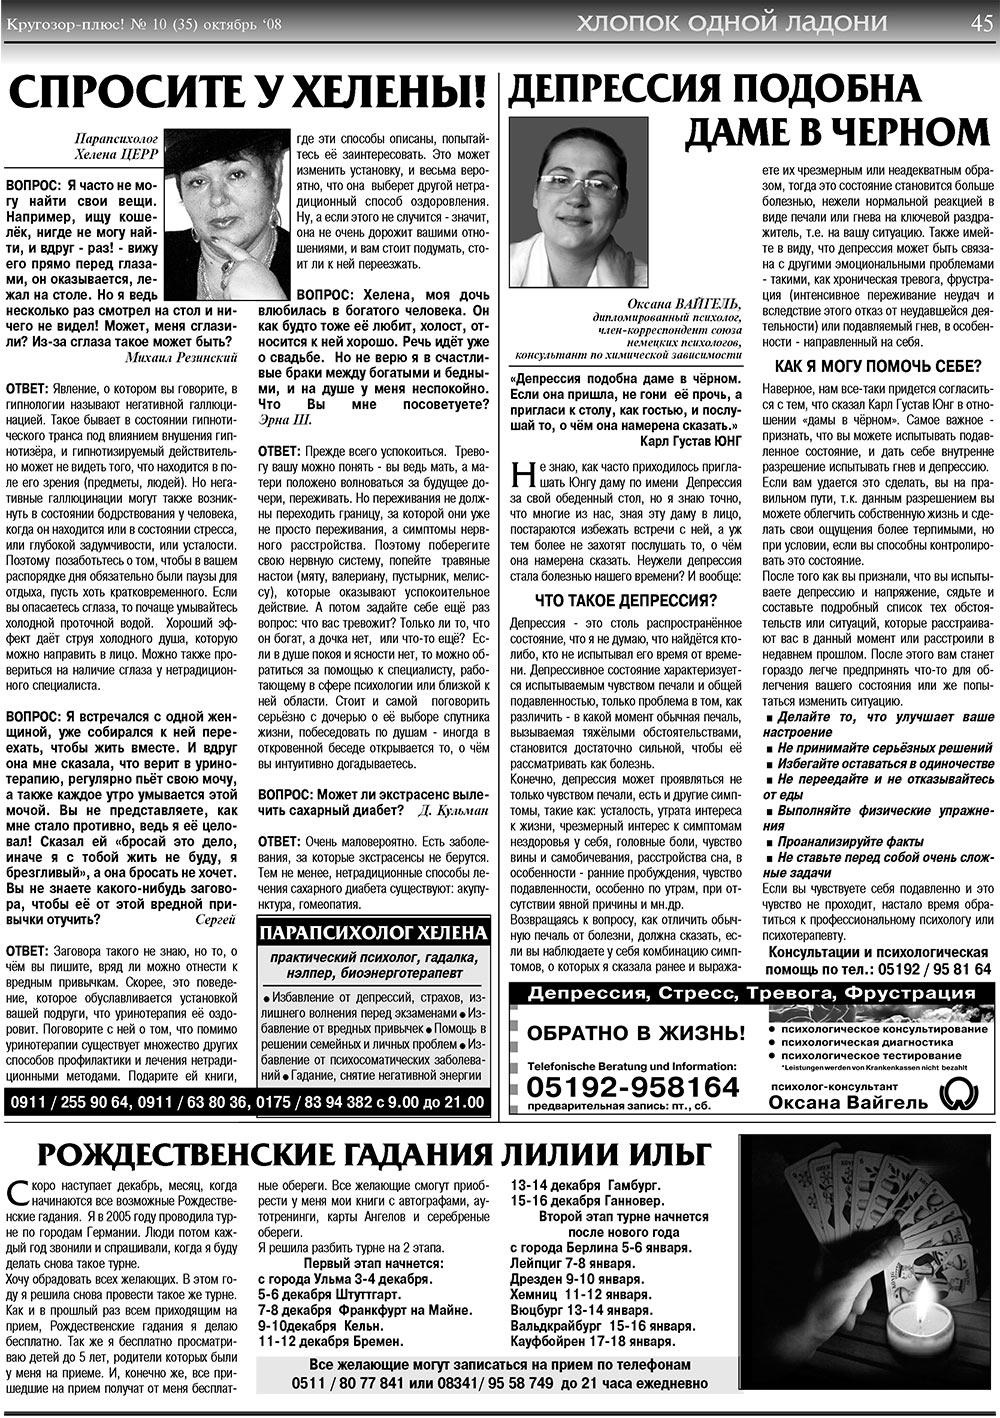 Кругозор плюс! (газета). 2008 год, номер 10, стр. 45